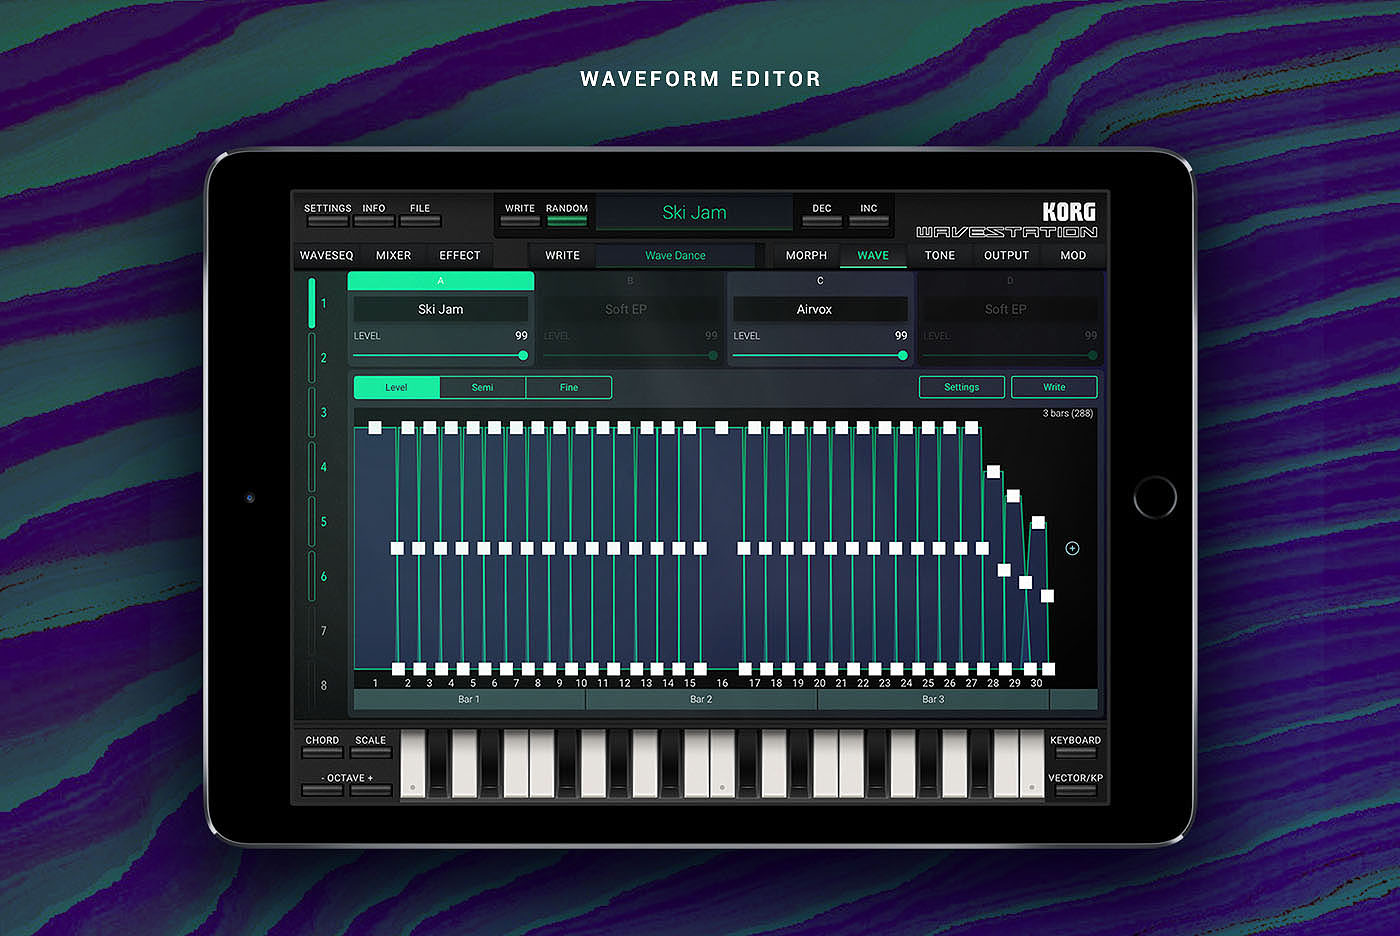 Waveform editor controls playback behavior per step